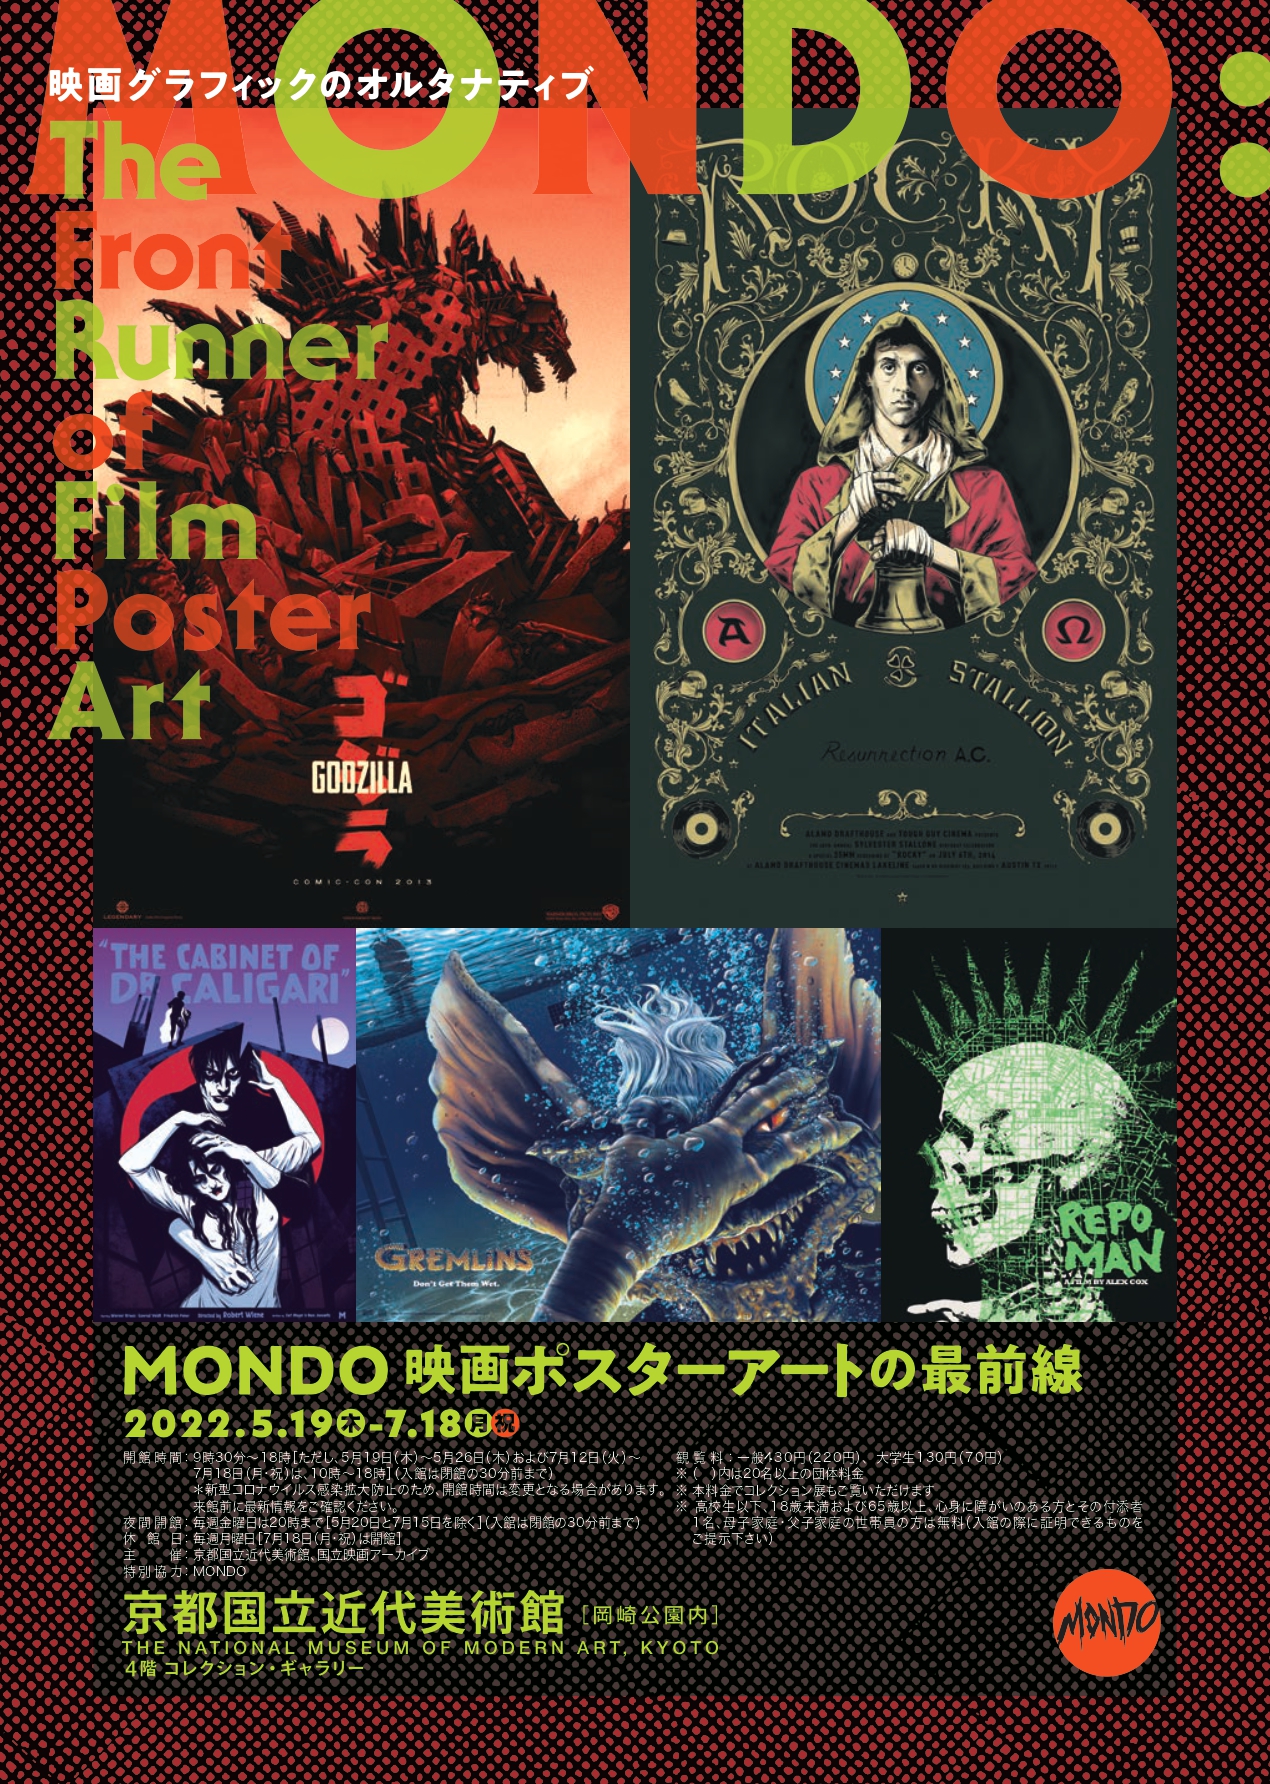 Mondo: The Front Runner of Film Poster Art （The National Museum 